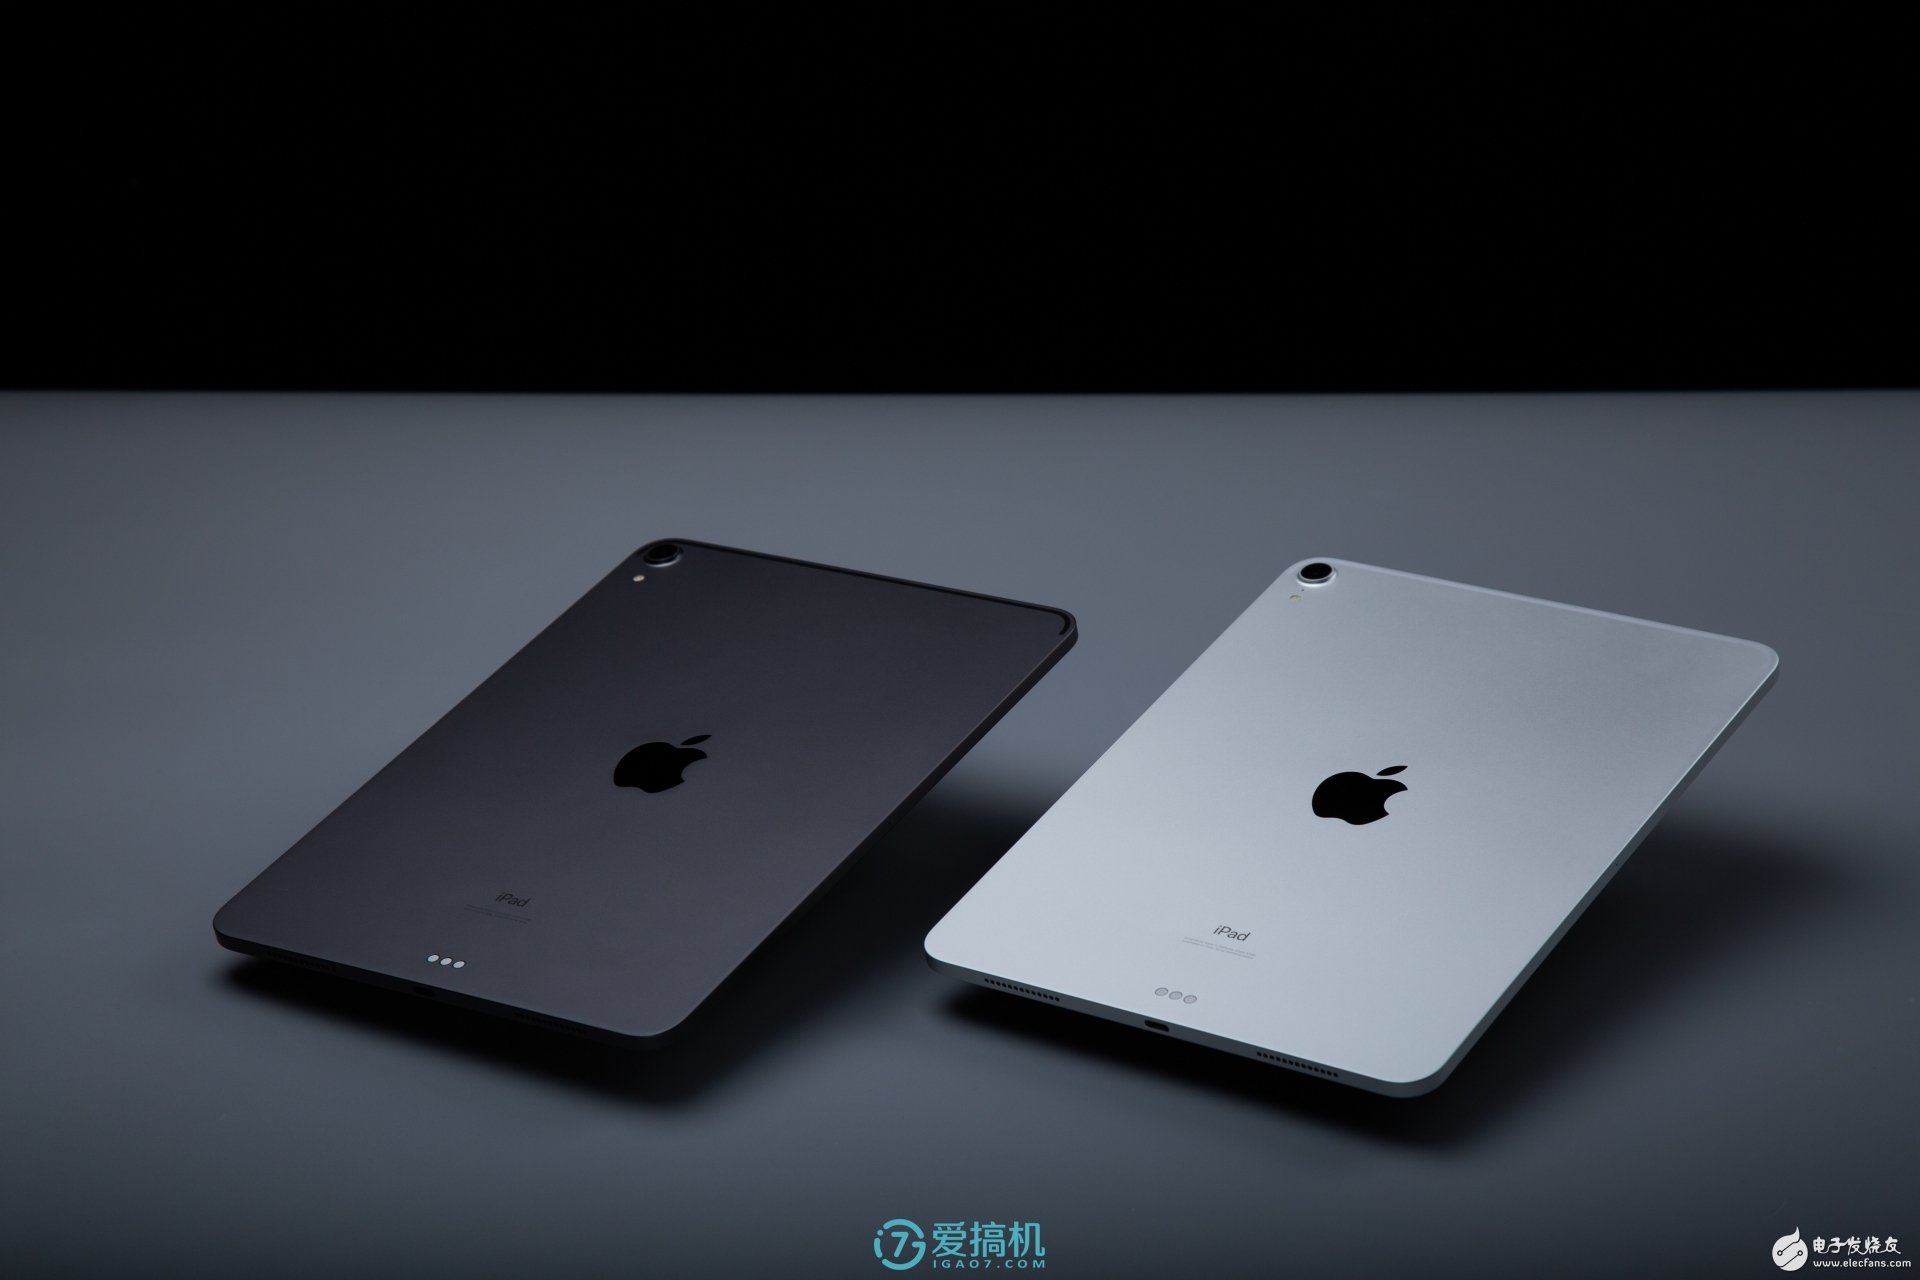 iPad Air 3 深空灰色 256G Cellular版 - 二手iPad Air 3 - 爱否商城(www.aifou.cn)